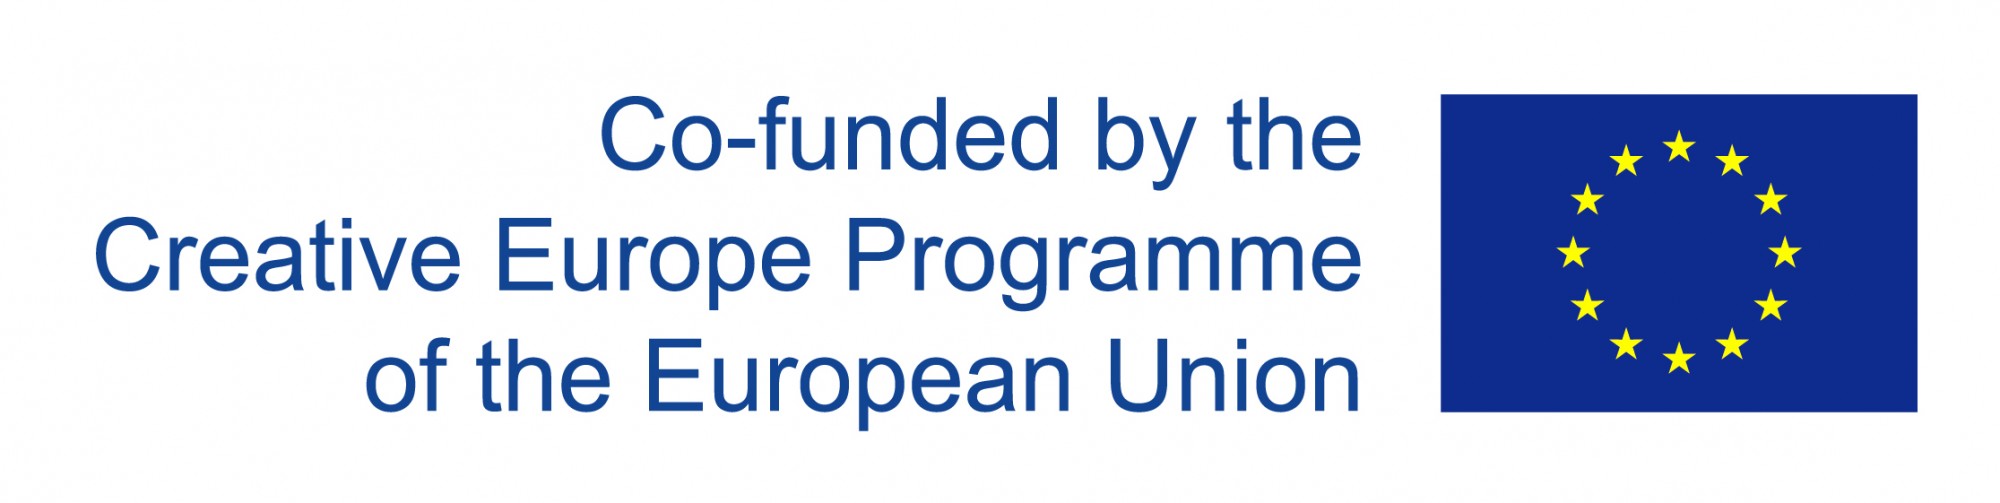 Creative Europe Programme - European Commission